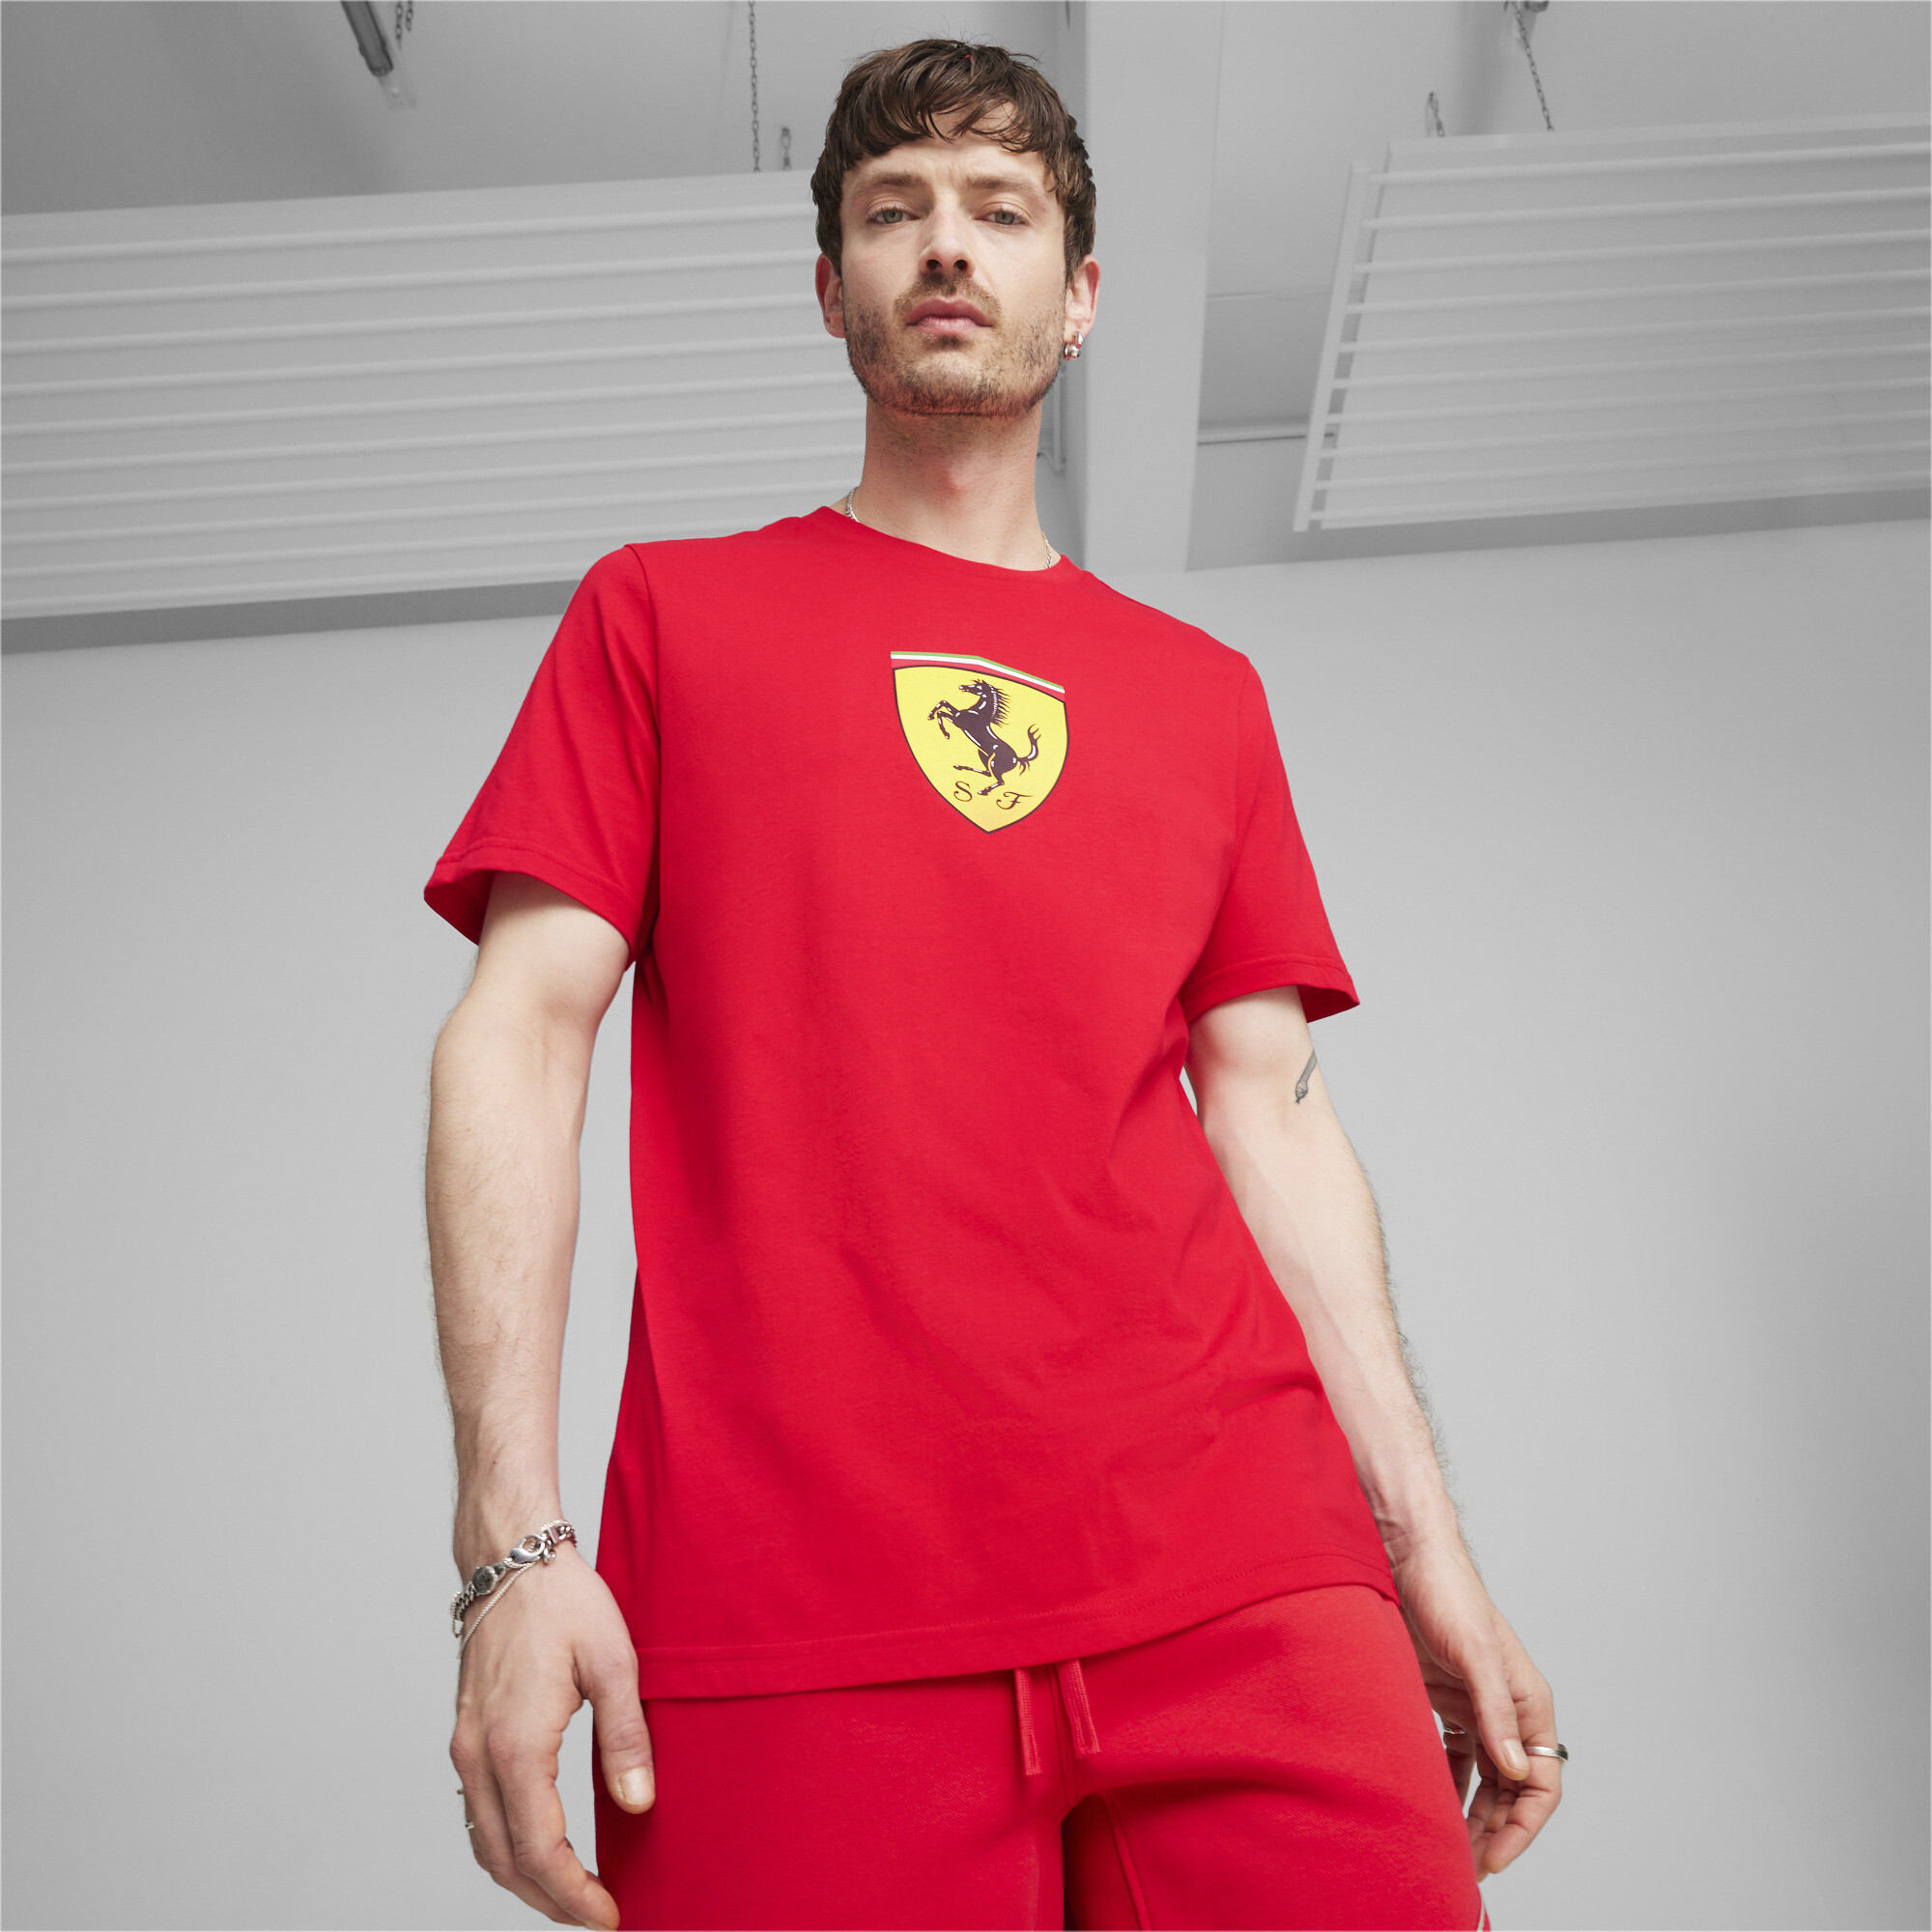 Men's PUMA Scuderia Ferrari Race T-Shirt In Red, Size Small